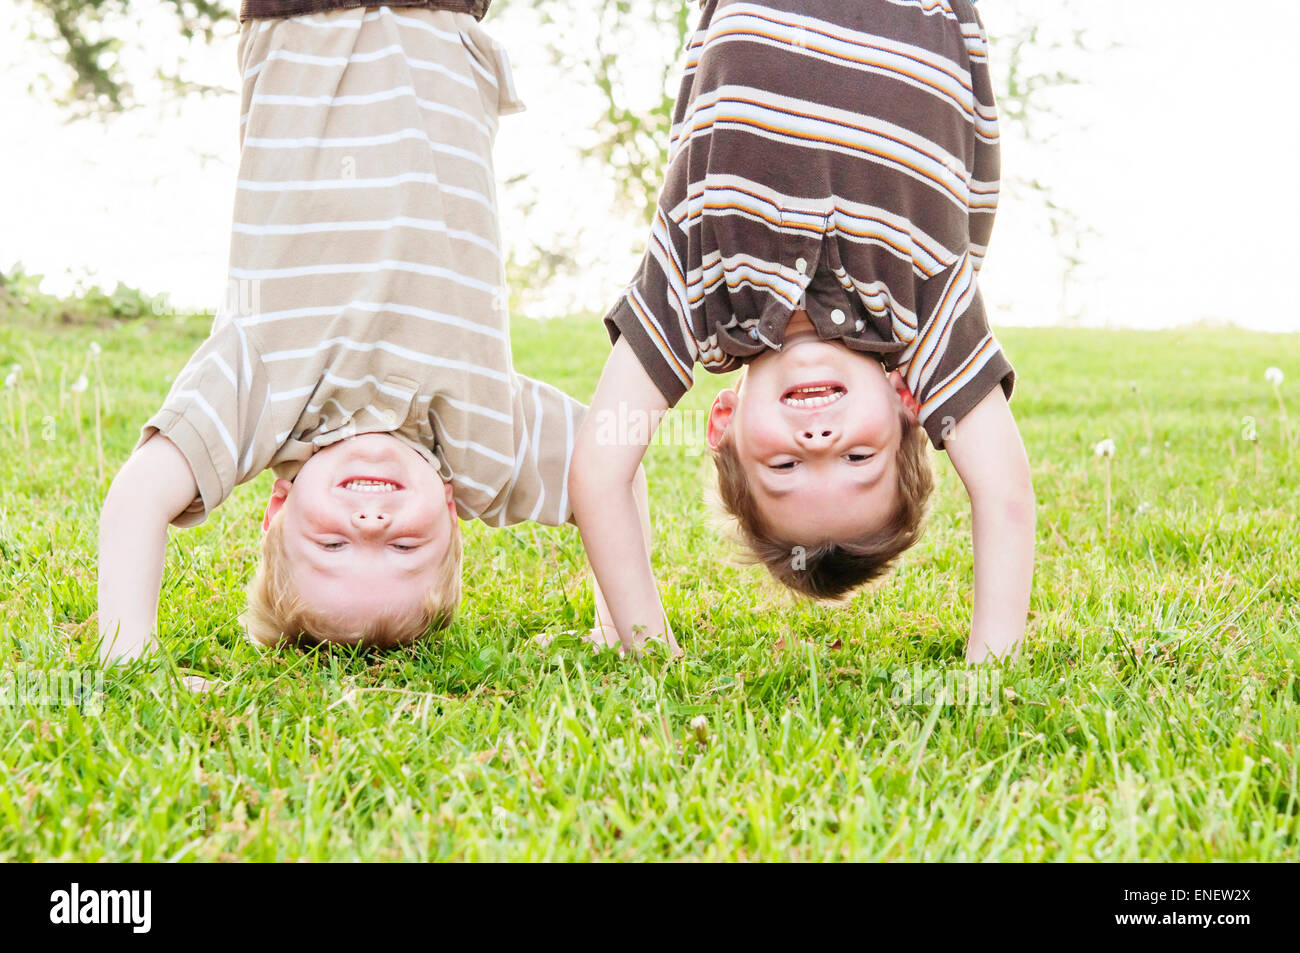 two boys upside down Stock Photo